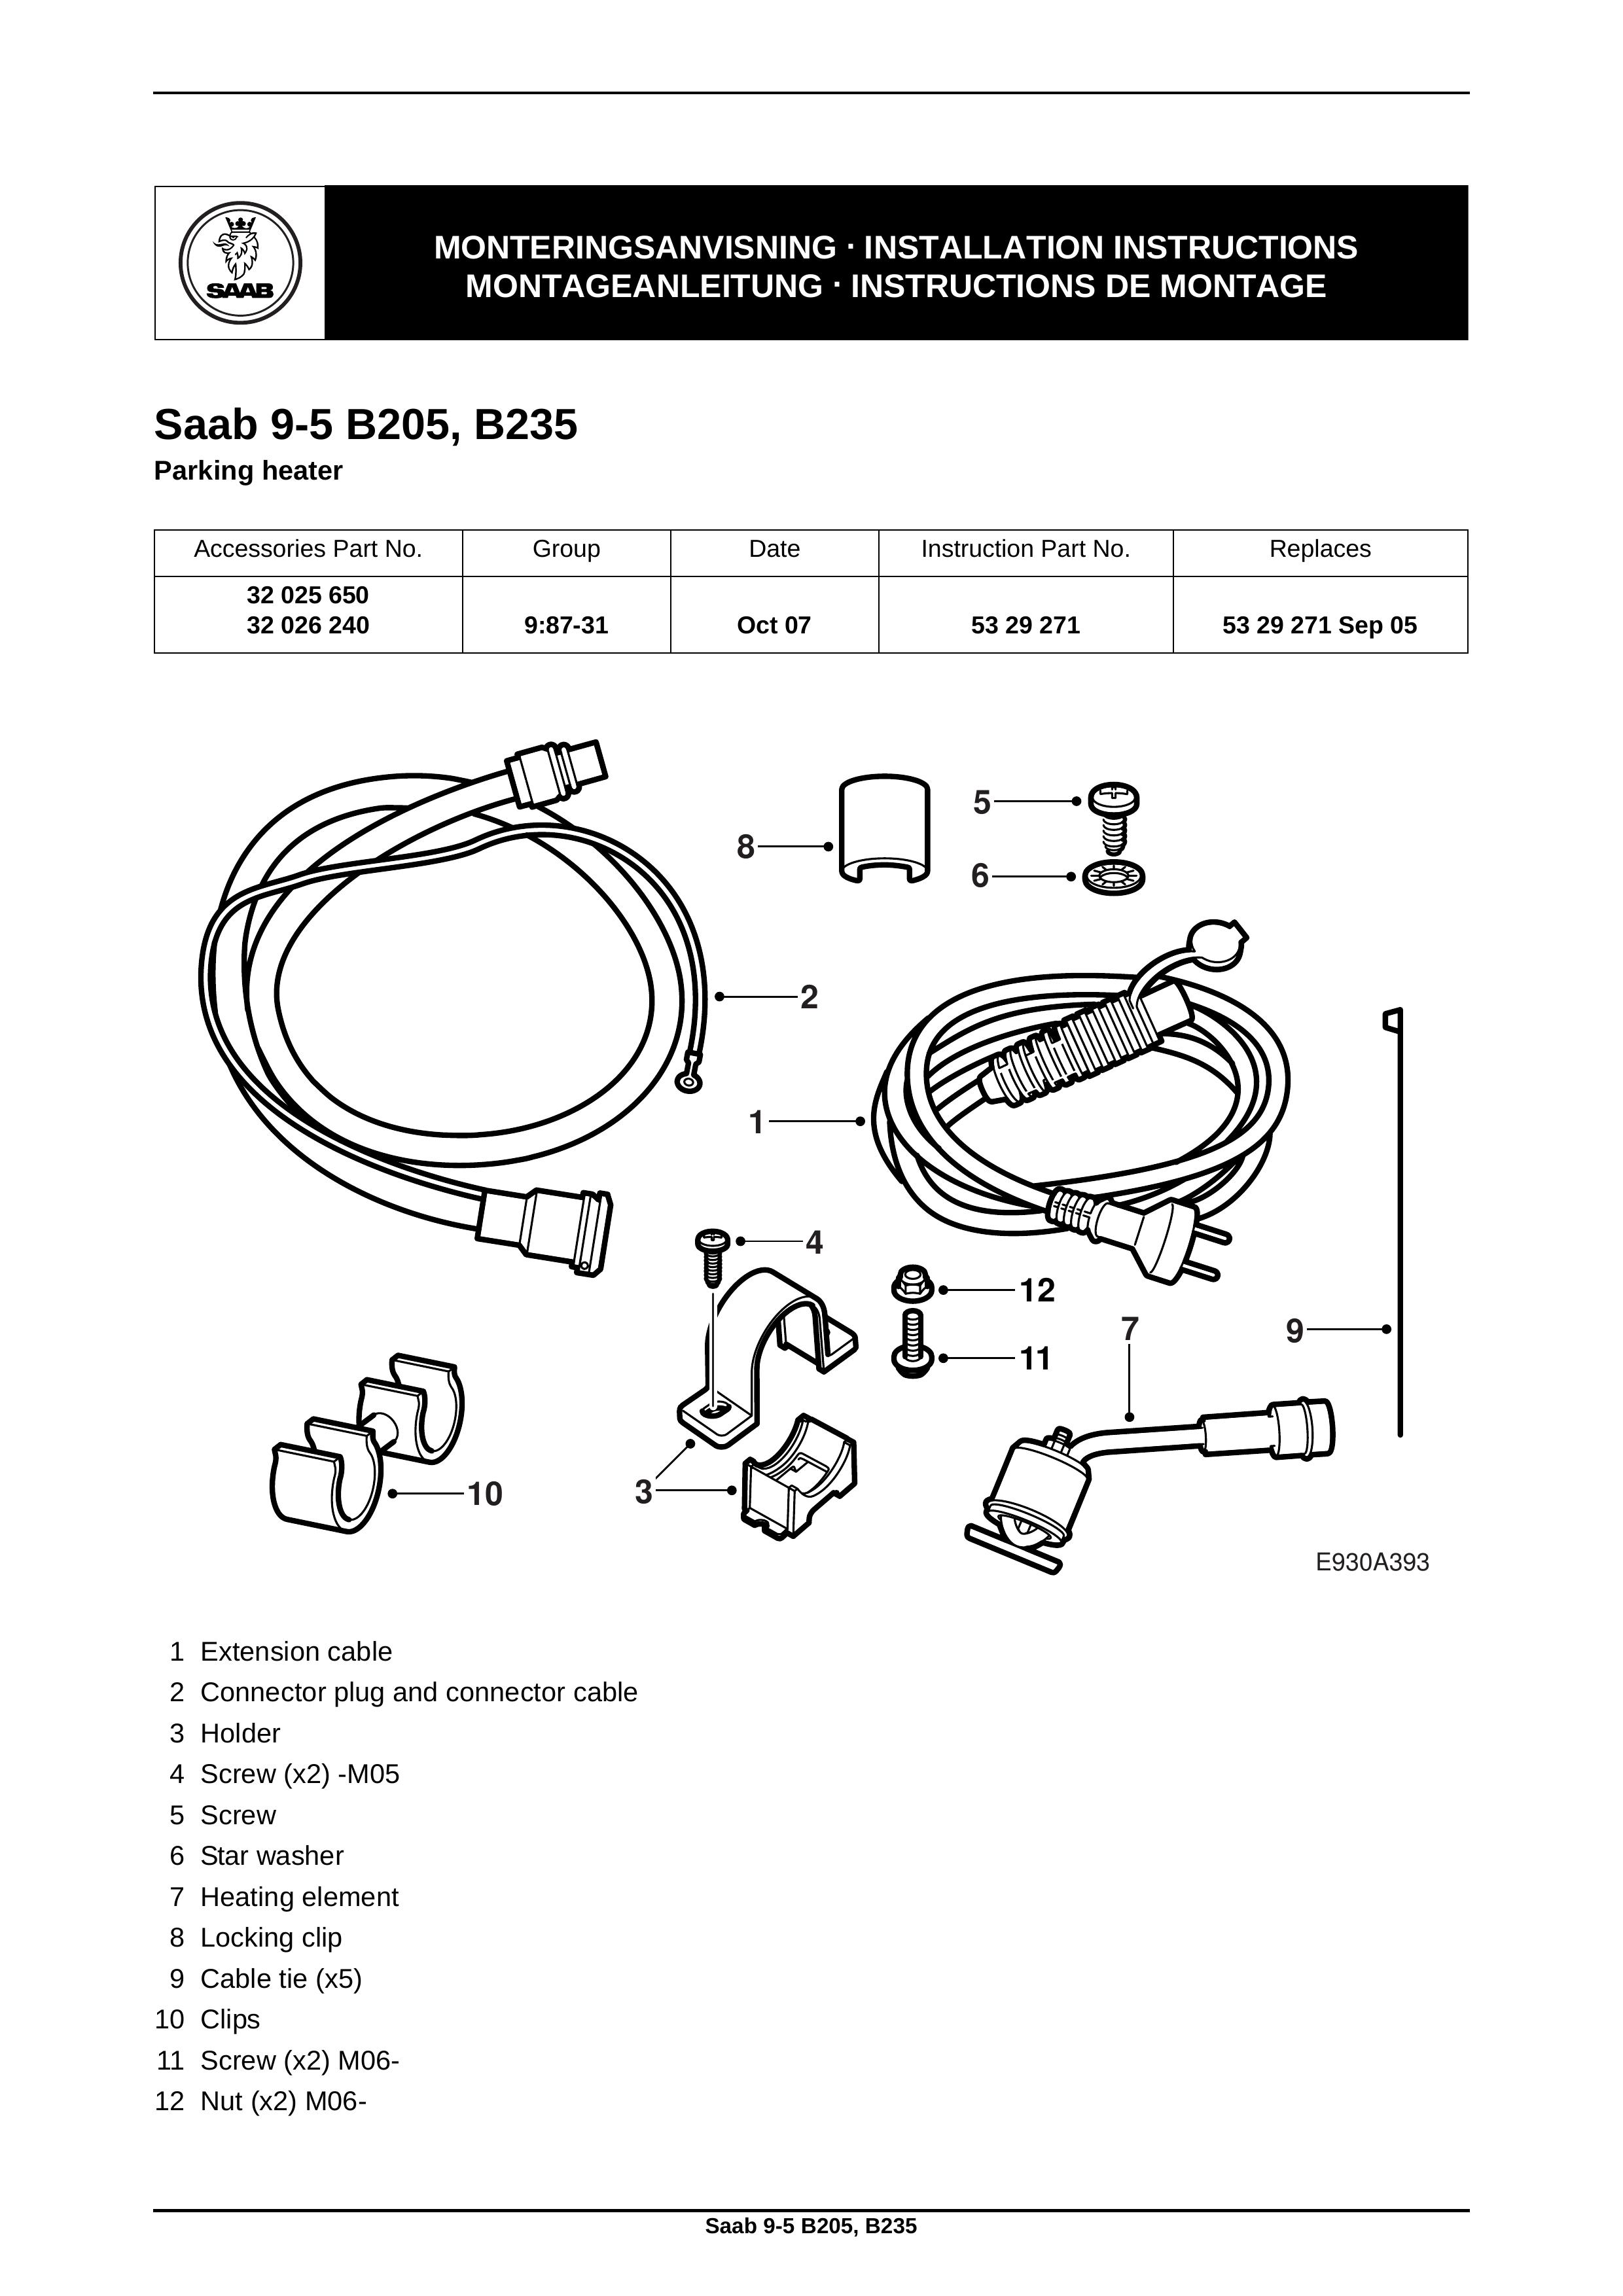 Saab B235 Patio Heater User Manual